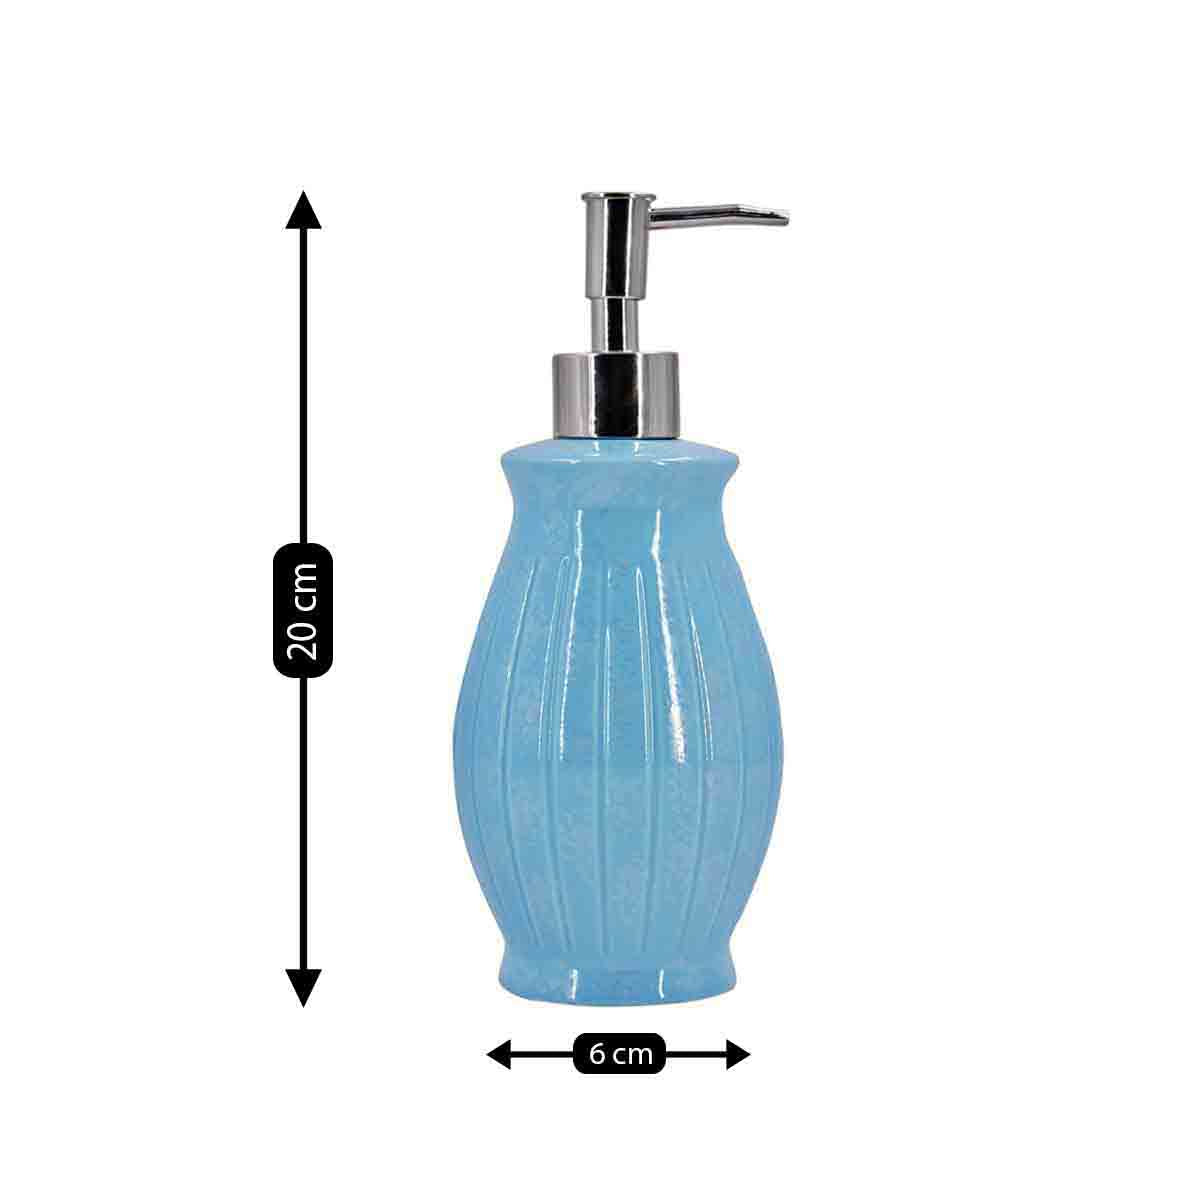 Ceramic Soap Dispenser handwash Pump for Bathroom, Set of 1, Blue (8005)